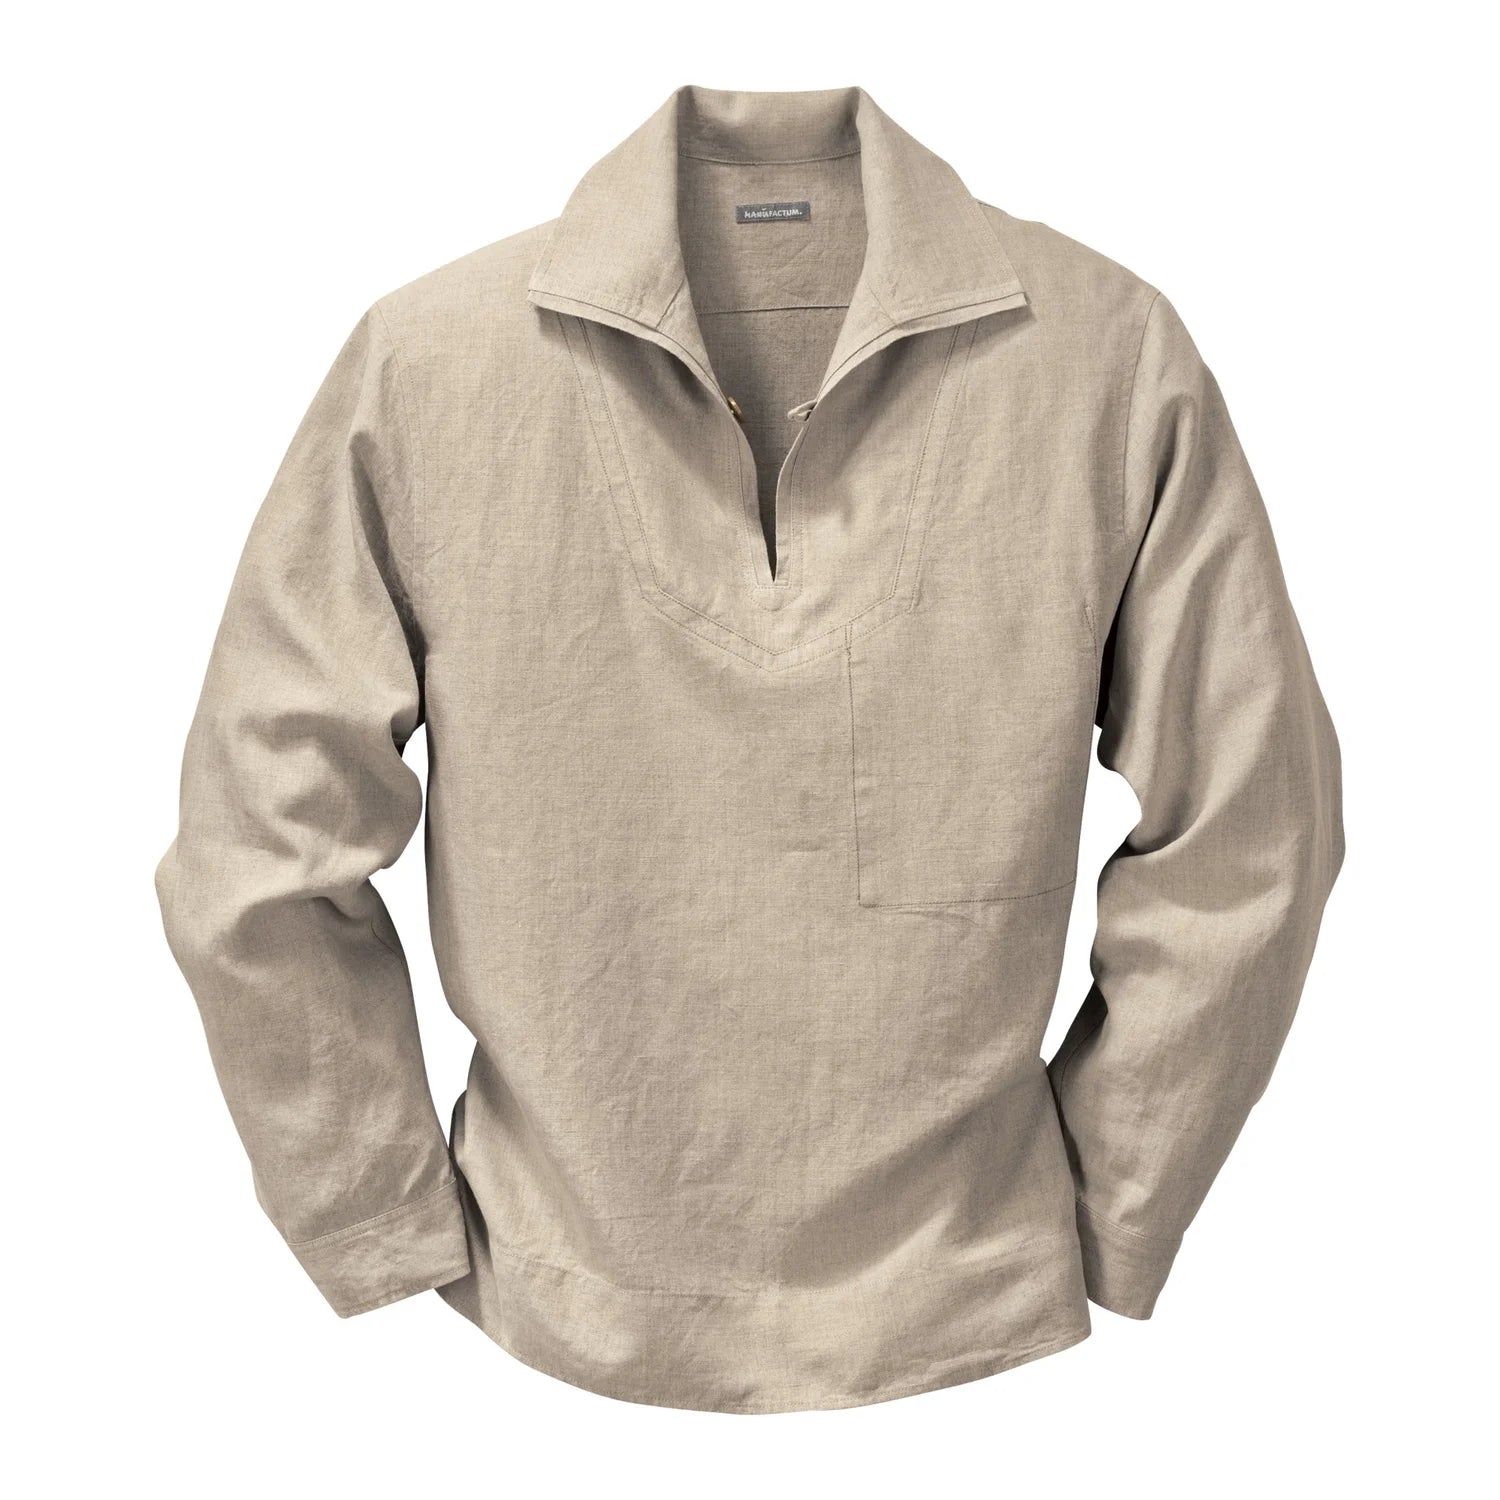 Fisherman's Linen Shirt - S/M